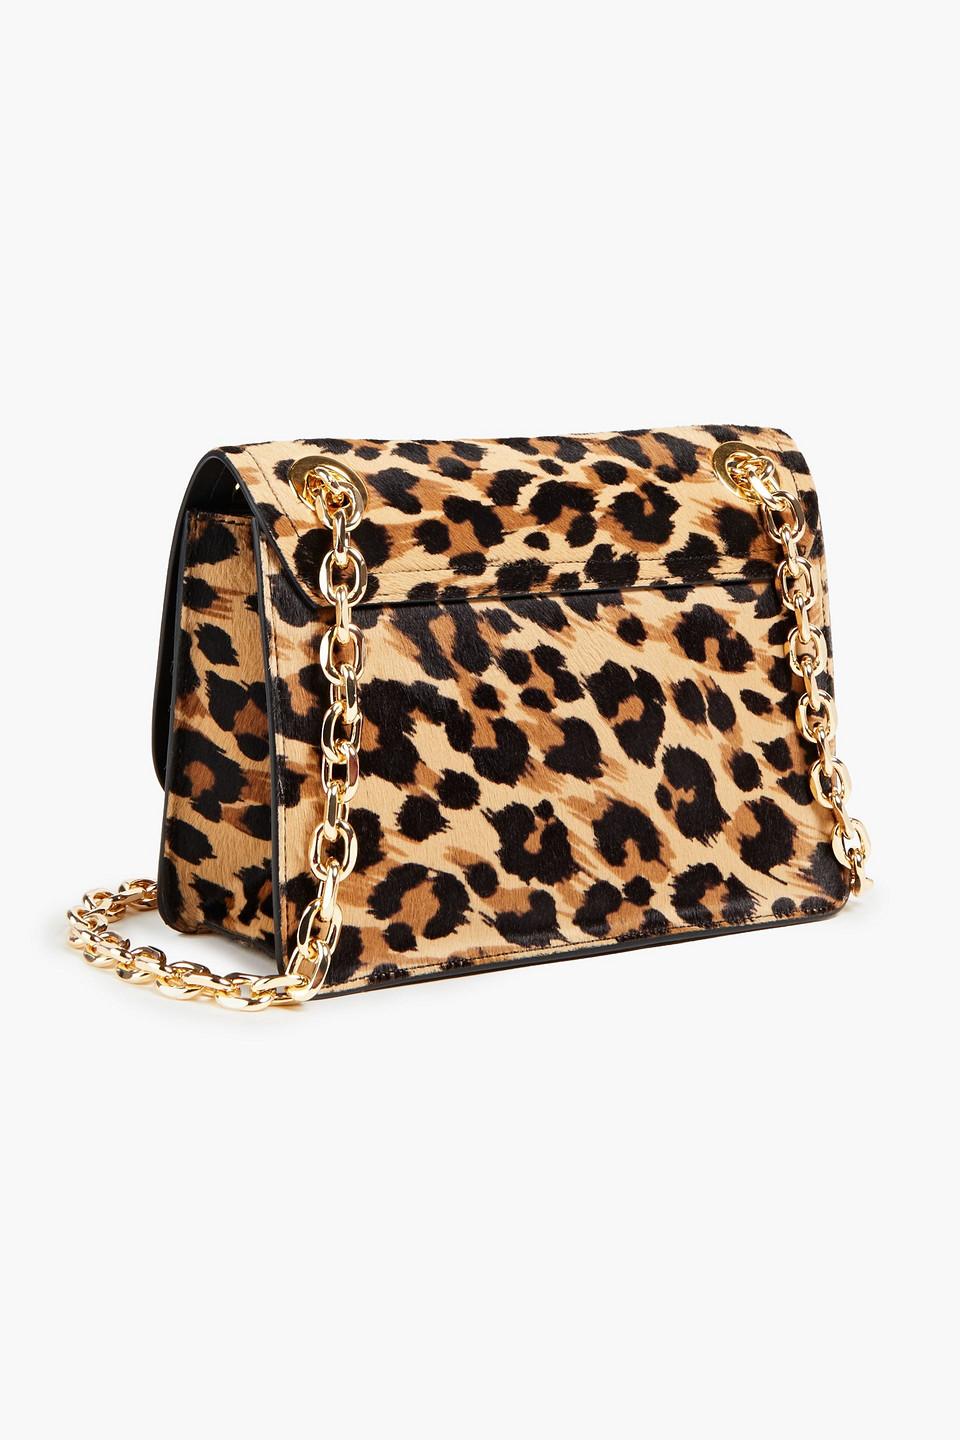 Leopard Calf Hair Hobo Bag